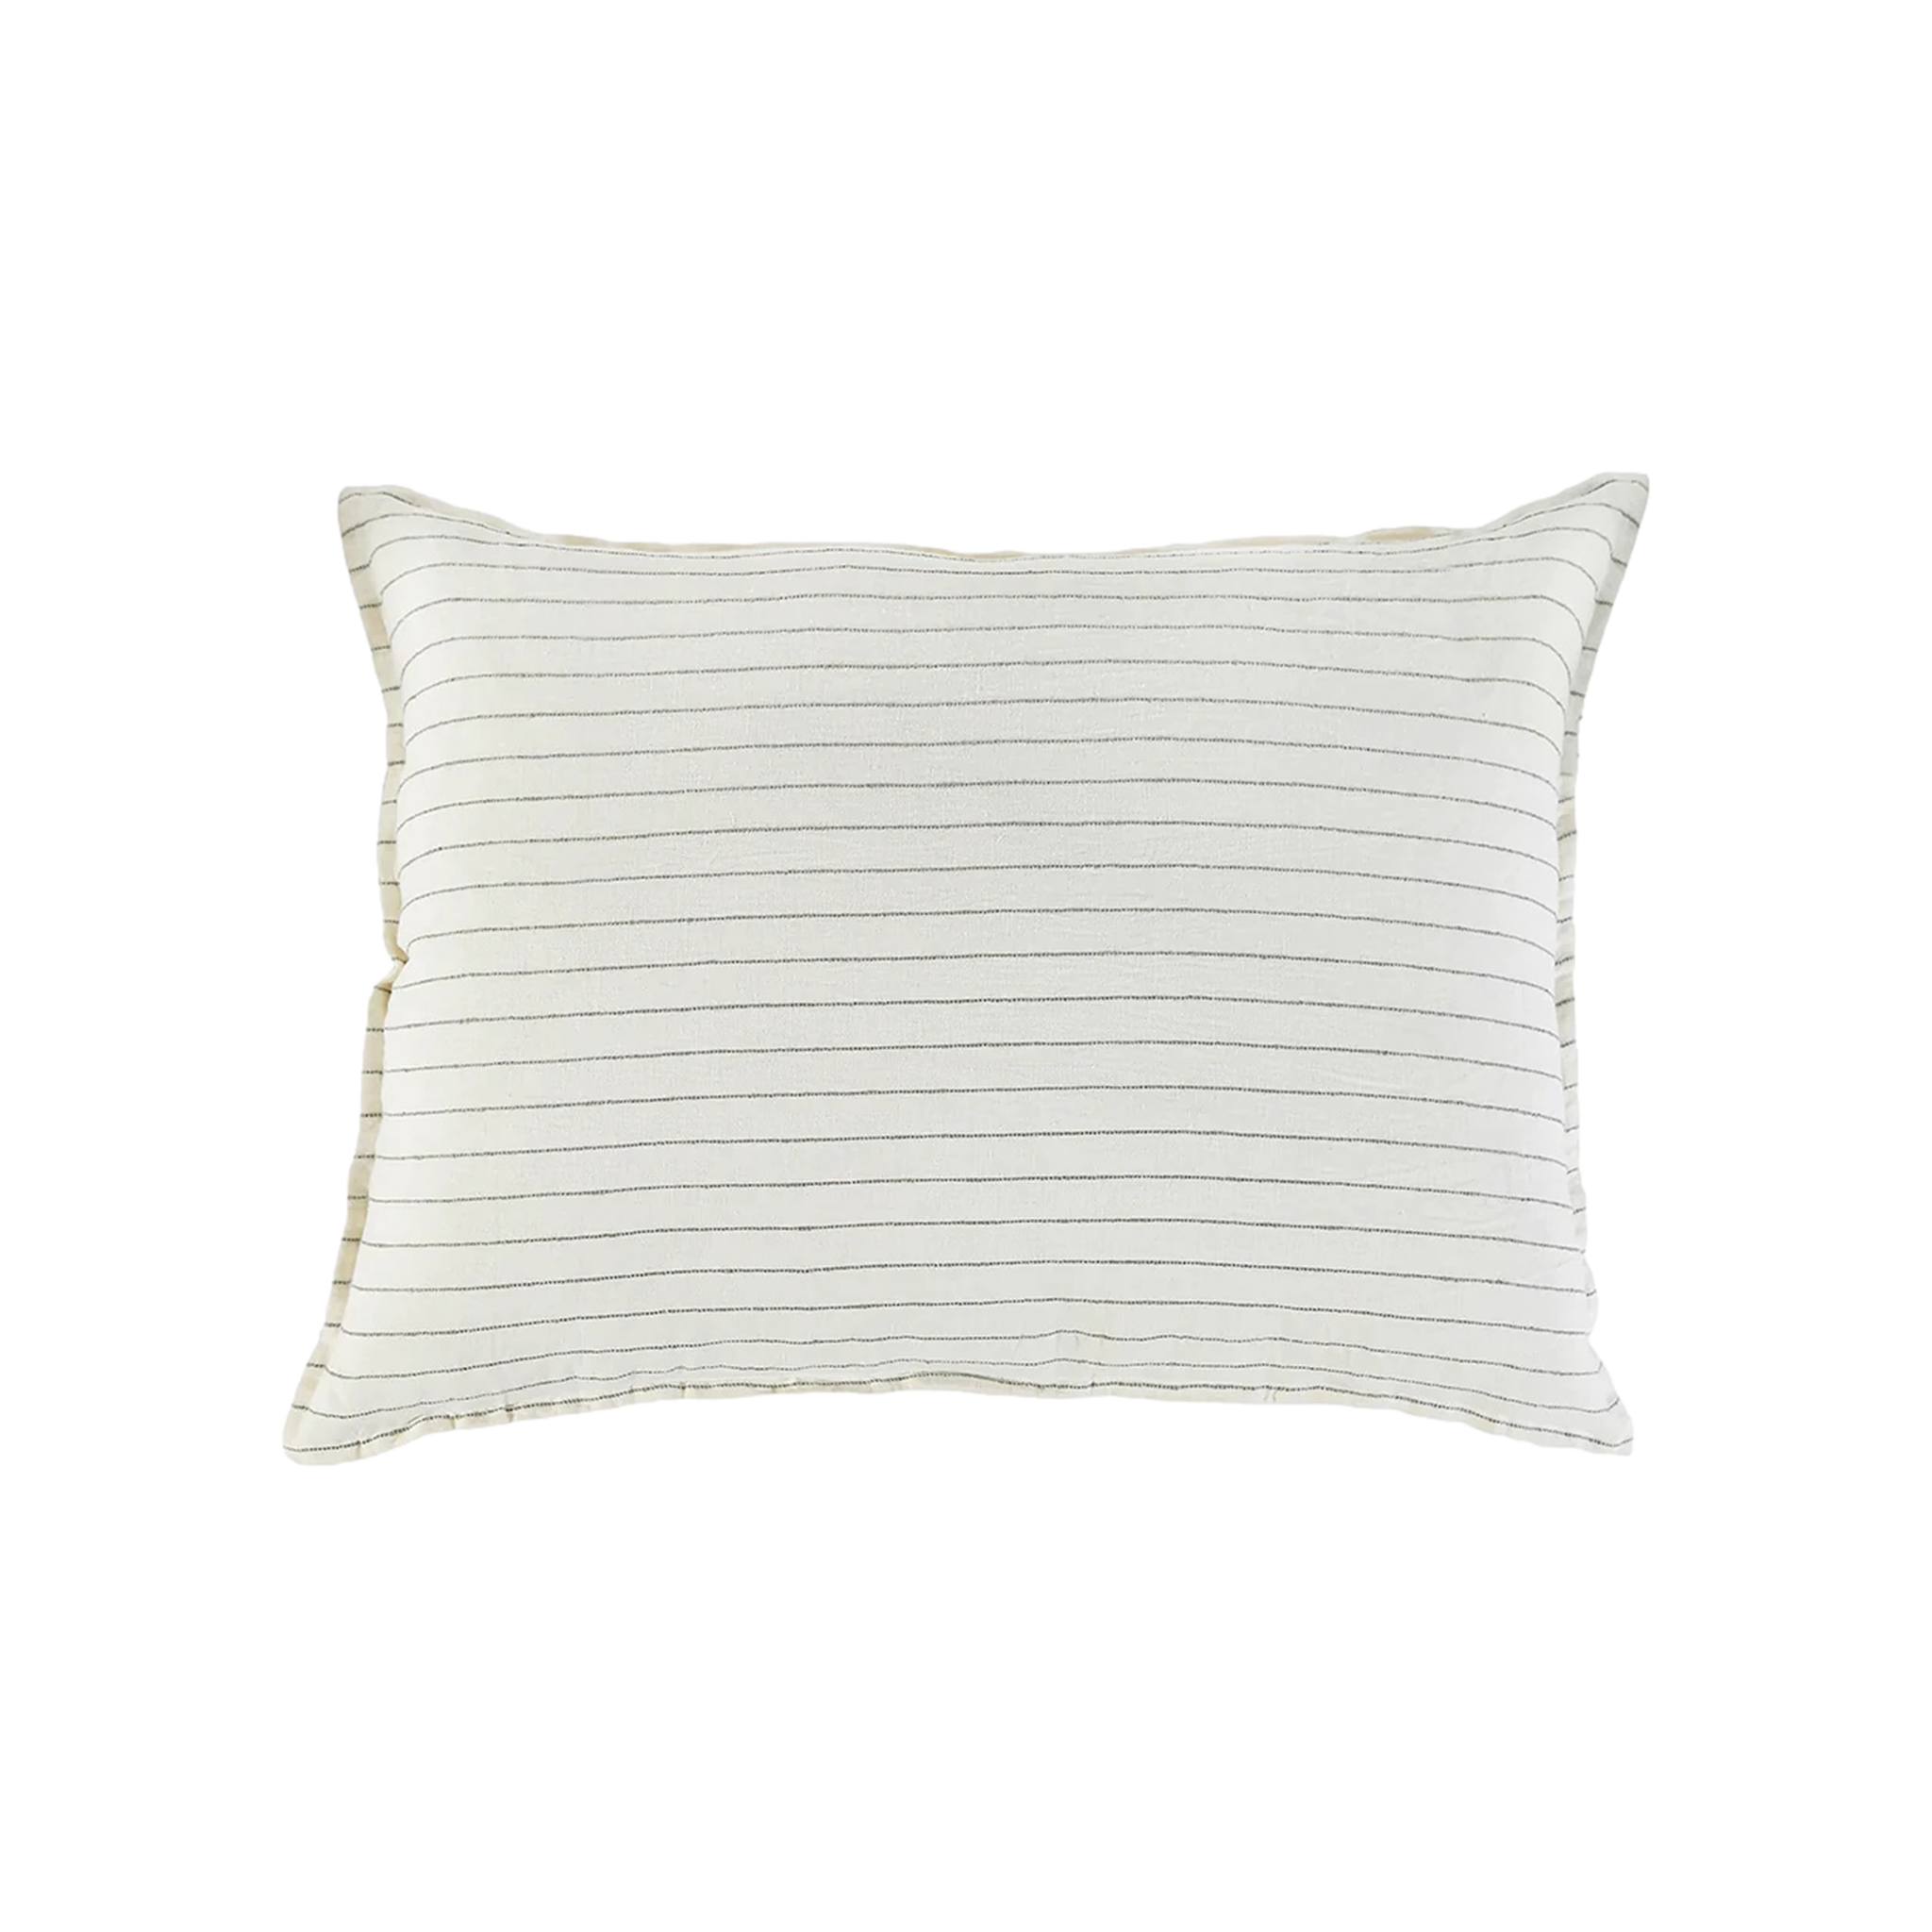 Blake Big Pillow in Cream/Grey